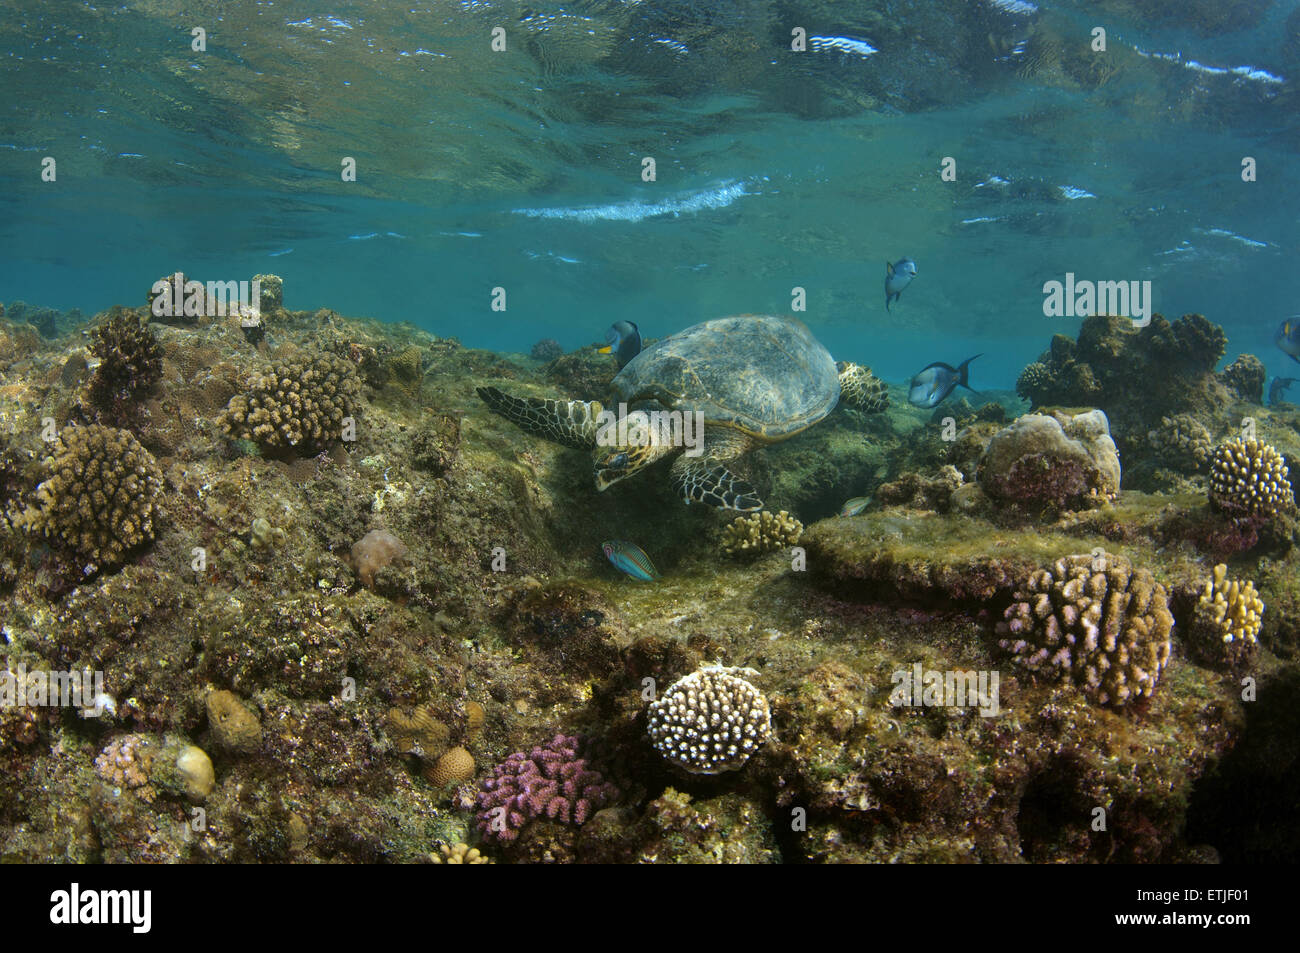 echte Karettschildkröte (Eretmochelys Imbricata) Essen Korallen im Roten Meer, Abu Dabab, Marsa Alam, Ägypten Stockfoto